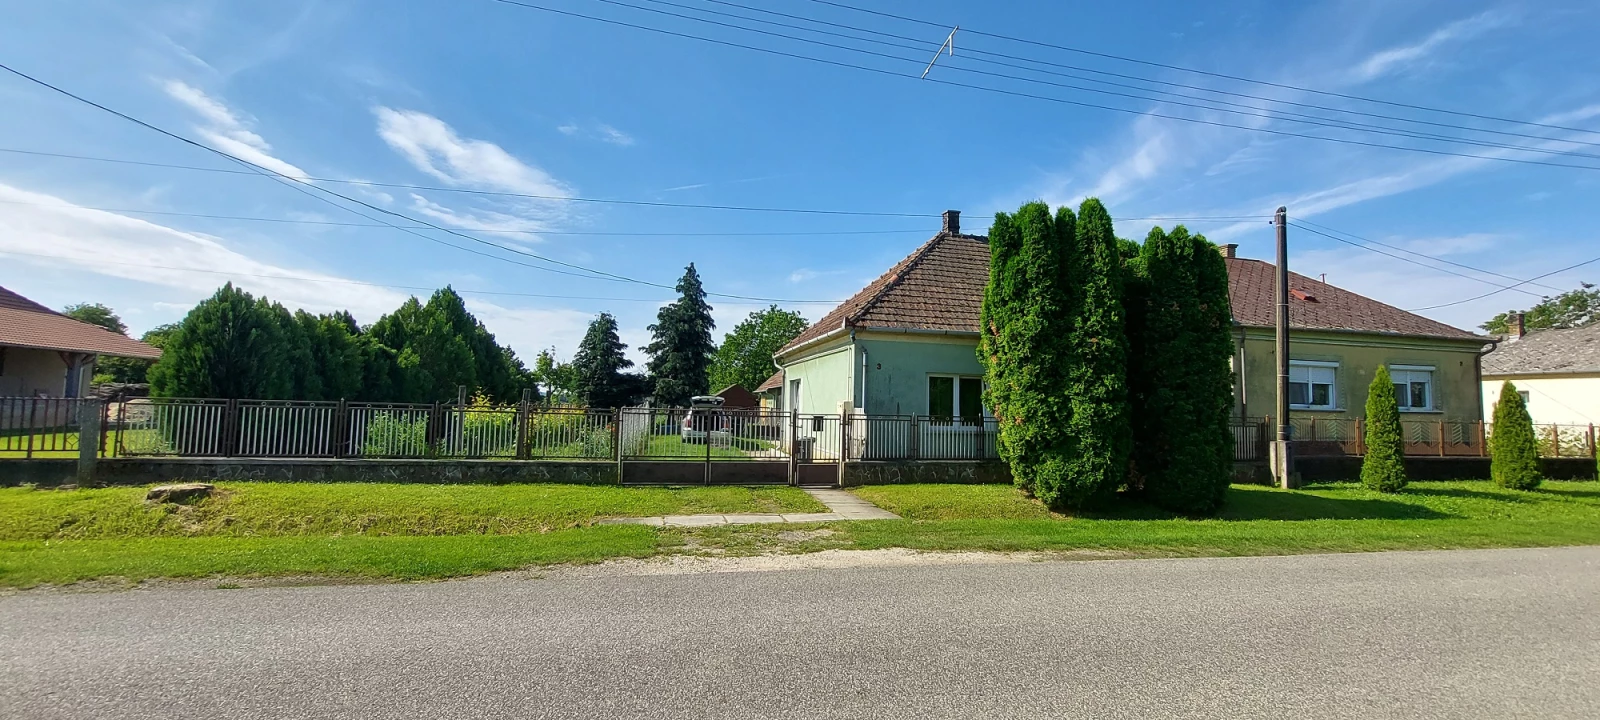 For sale house, Zalaszentgrót